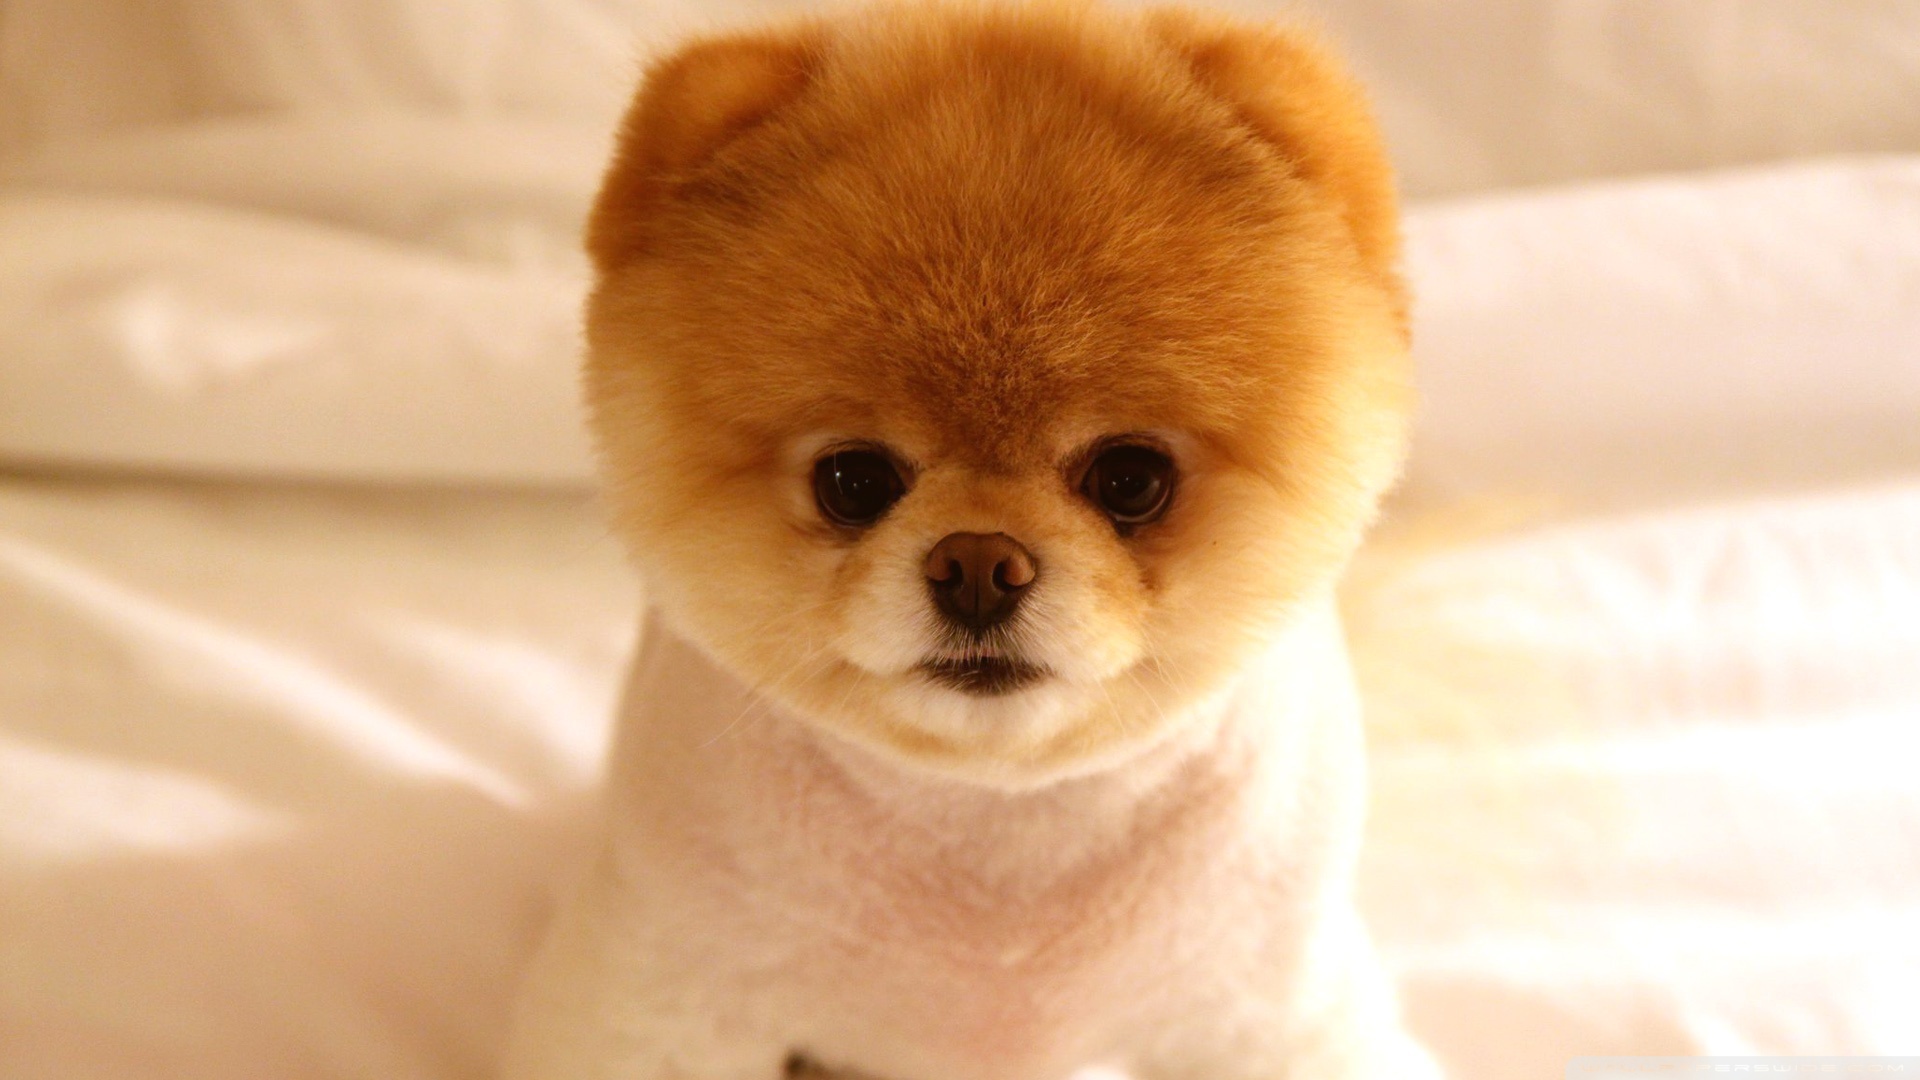 Desktop images of cute little dogs